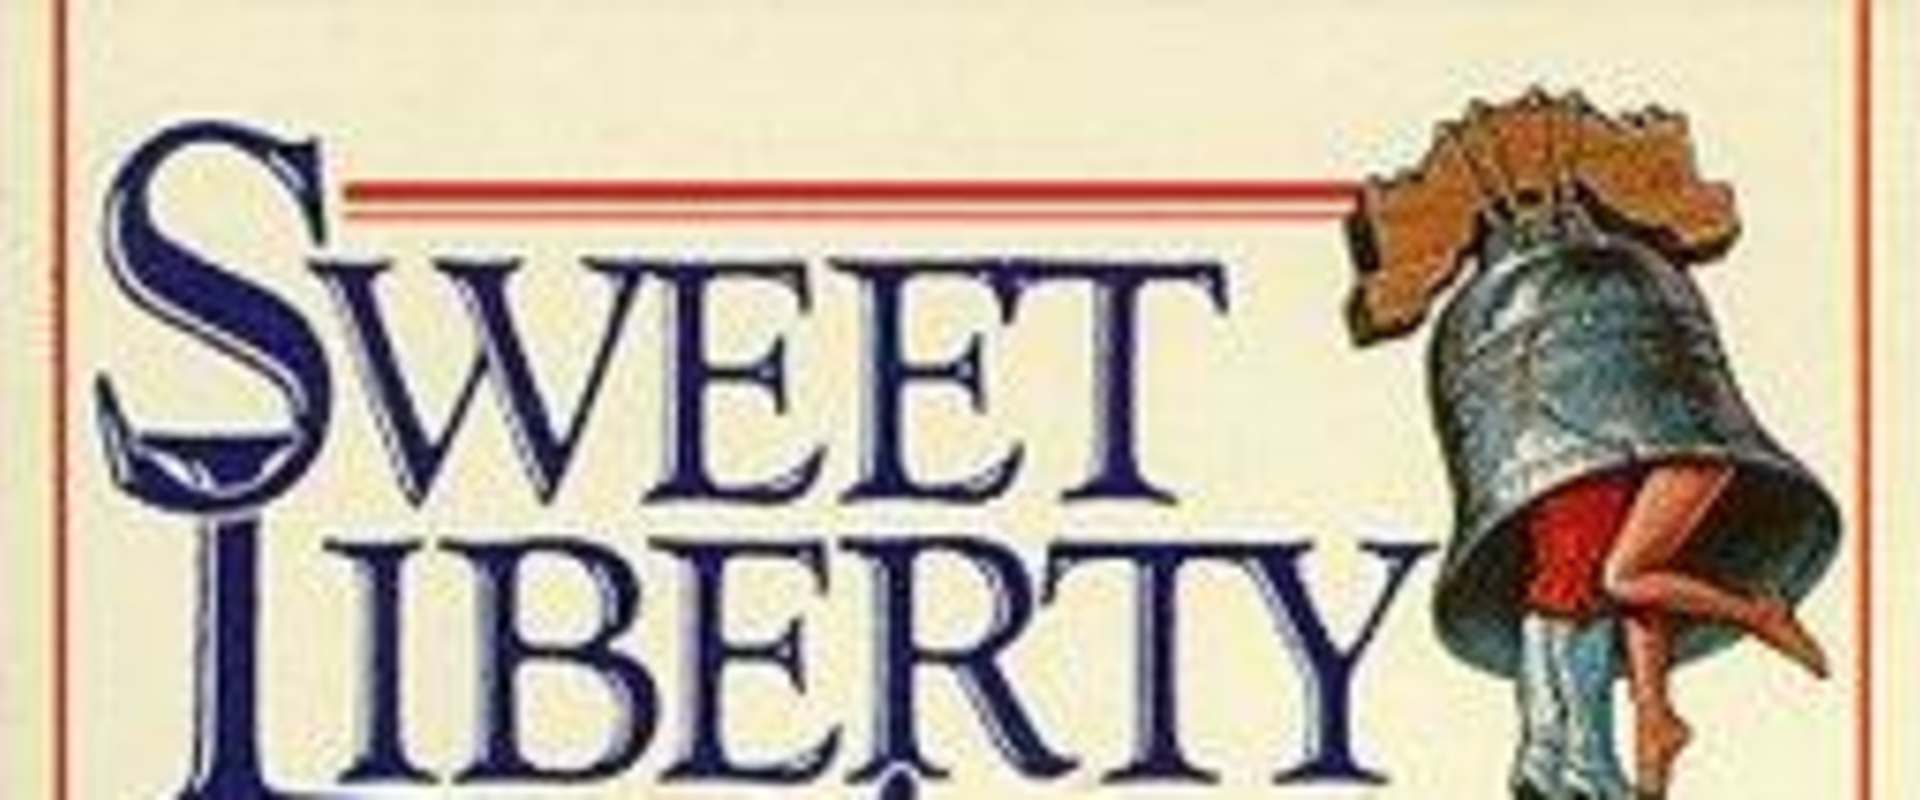 Sweet Liberty background 2